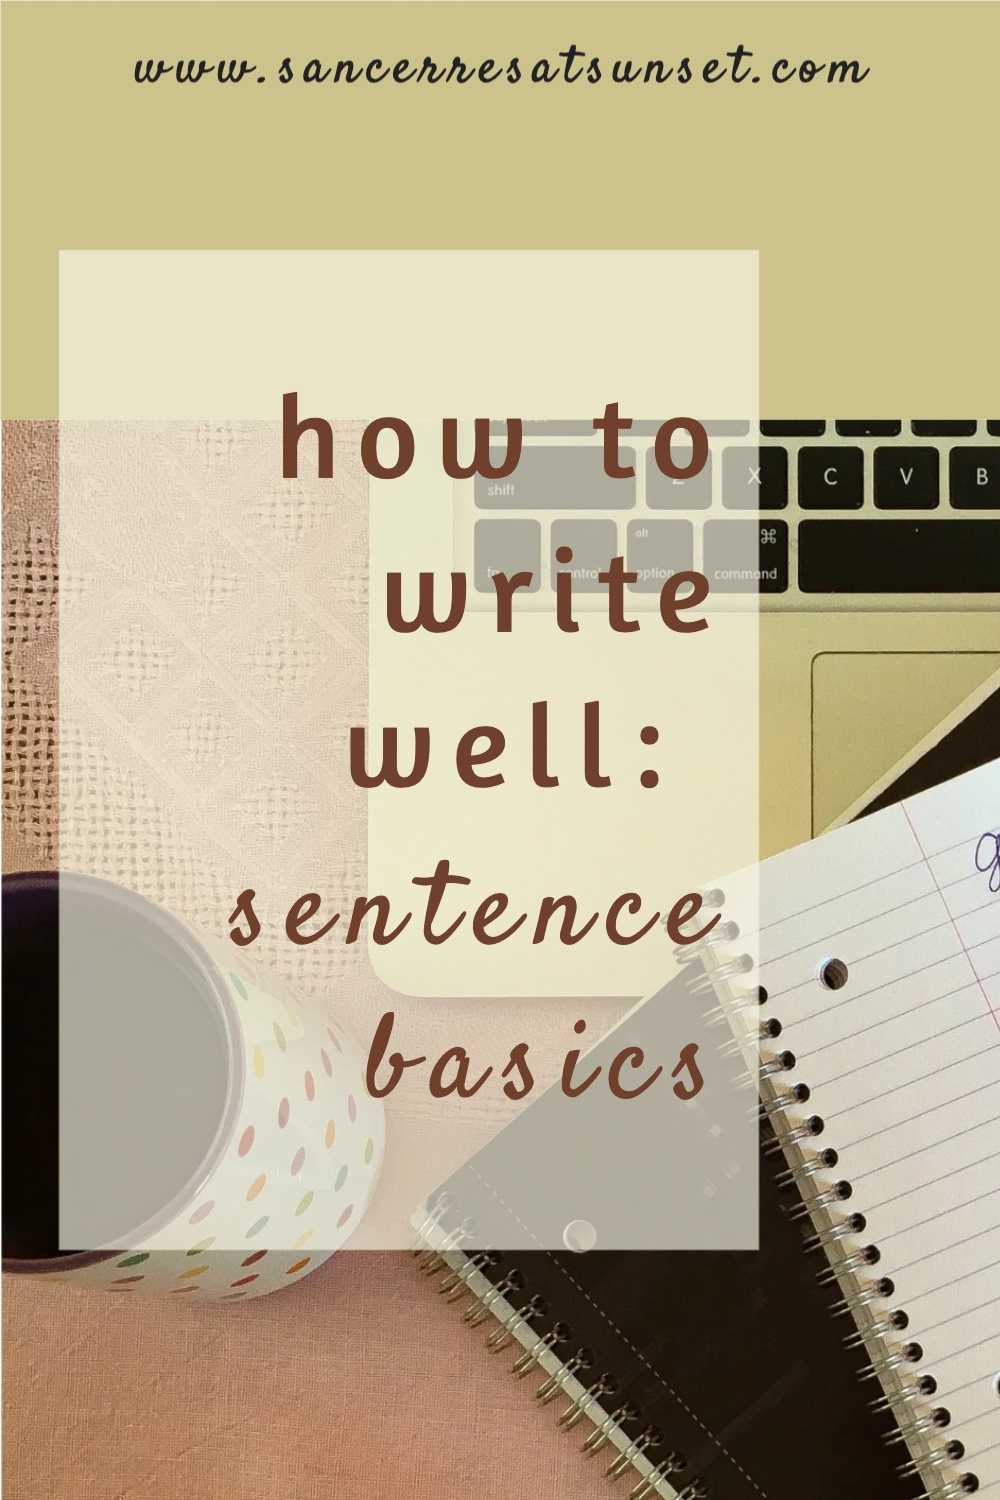 How to Write Well:  Sentence Basics